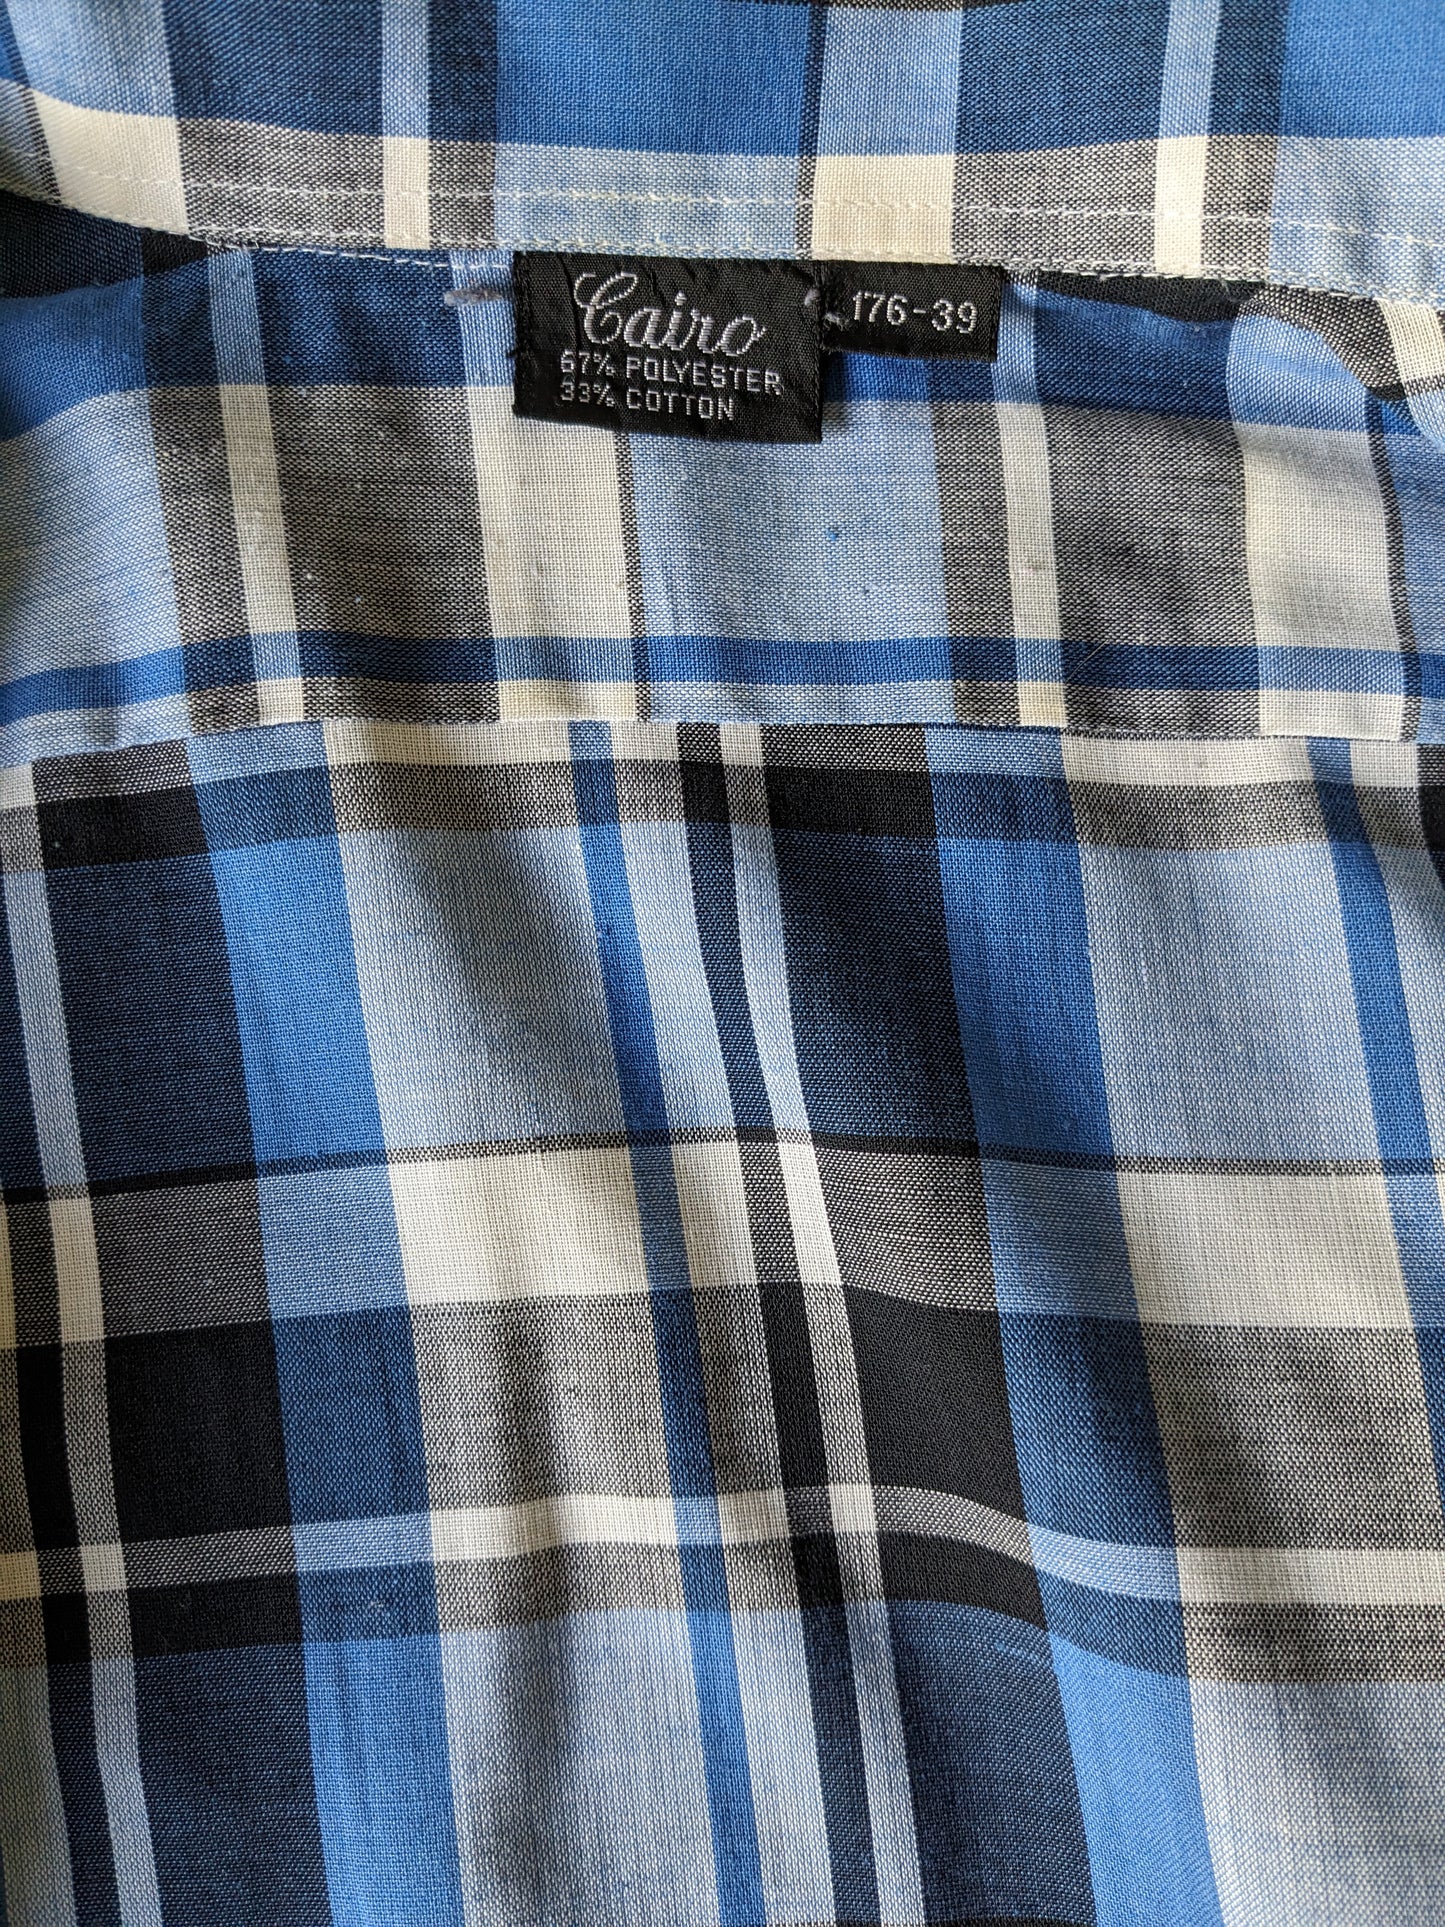 Vintage Cairo 70's shirt. Blue white black checked. Size M.